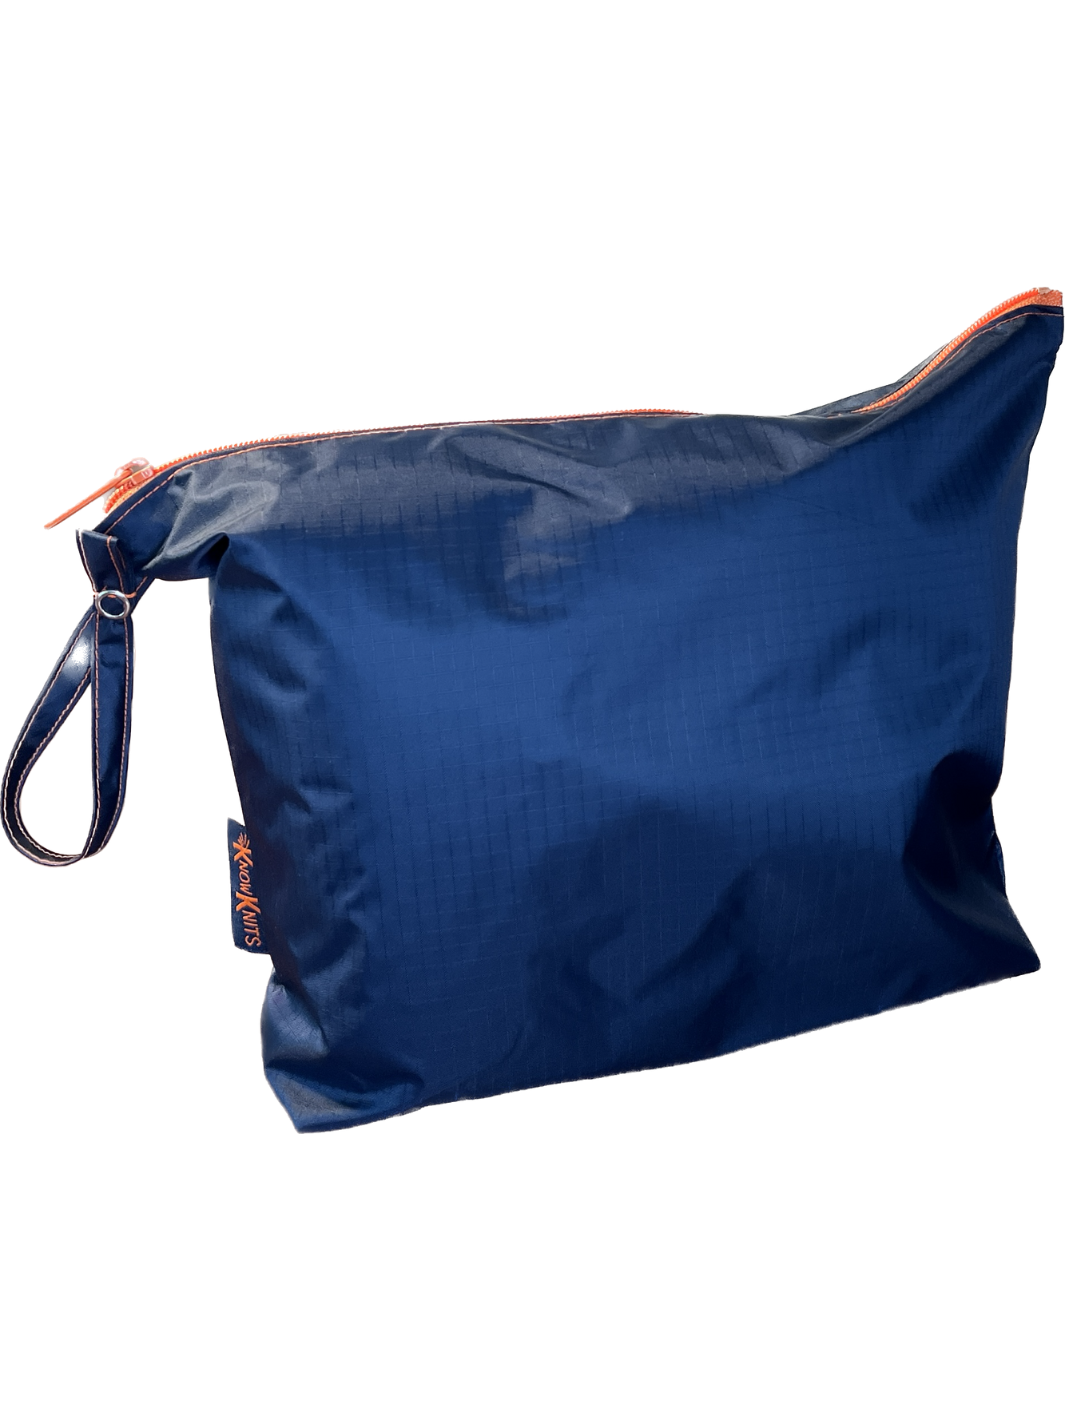 GoKnit Zip Project Bag